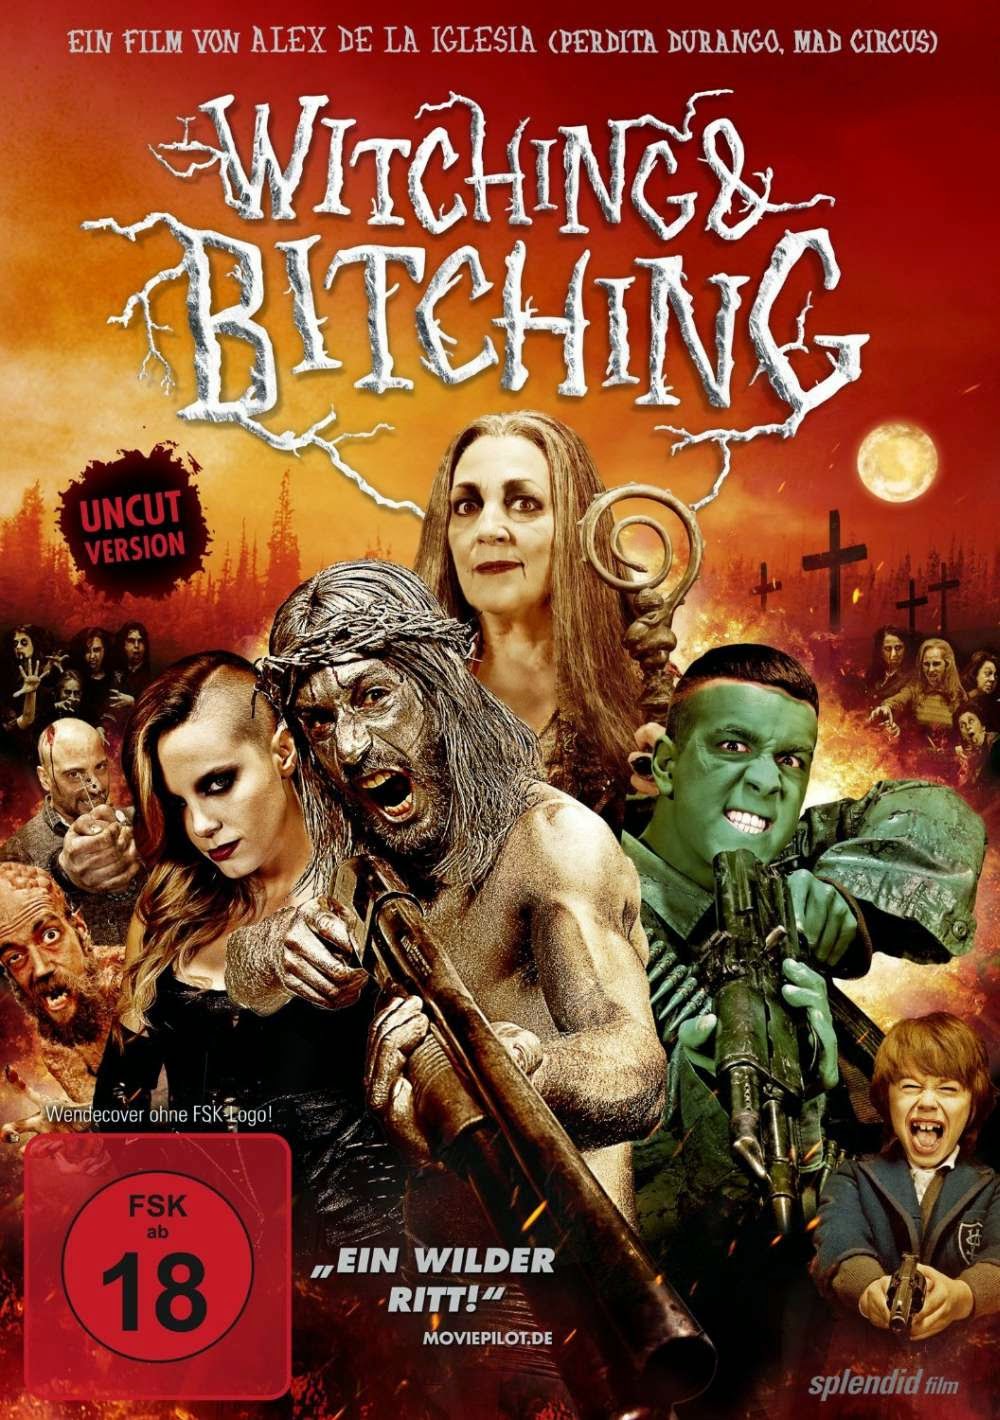 Witching and Bitching (Las brujas de Zugarramurdi)-áá¡ á¡á£á áááá¡ á¨ááááá